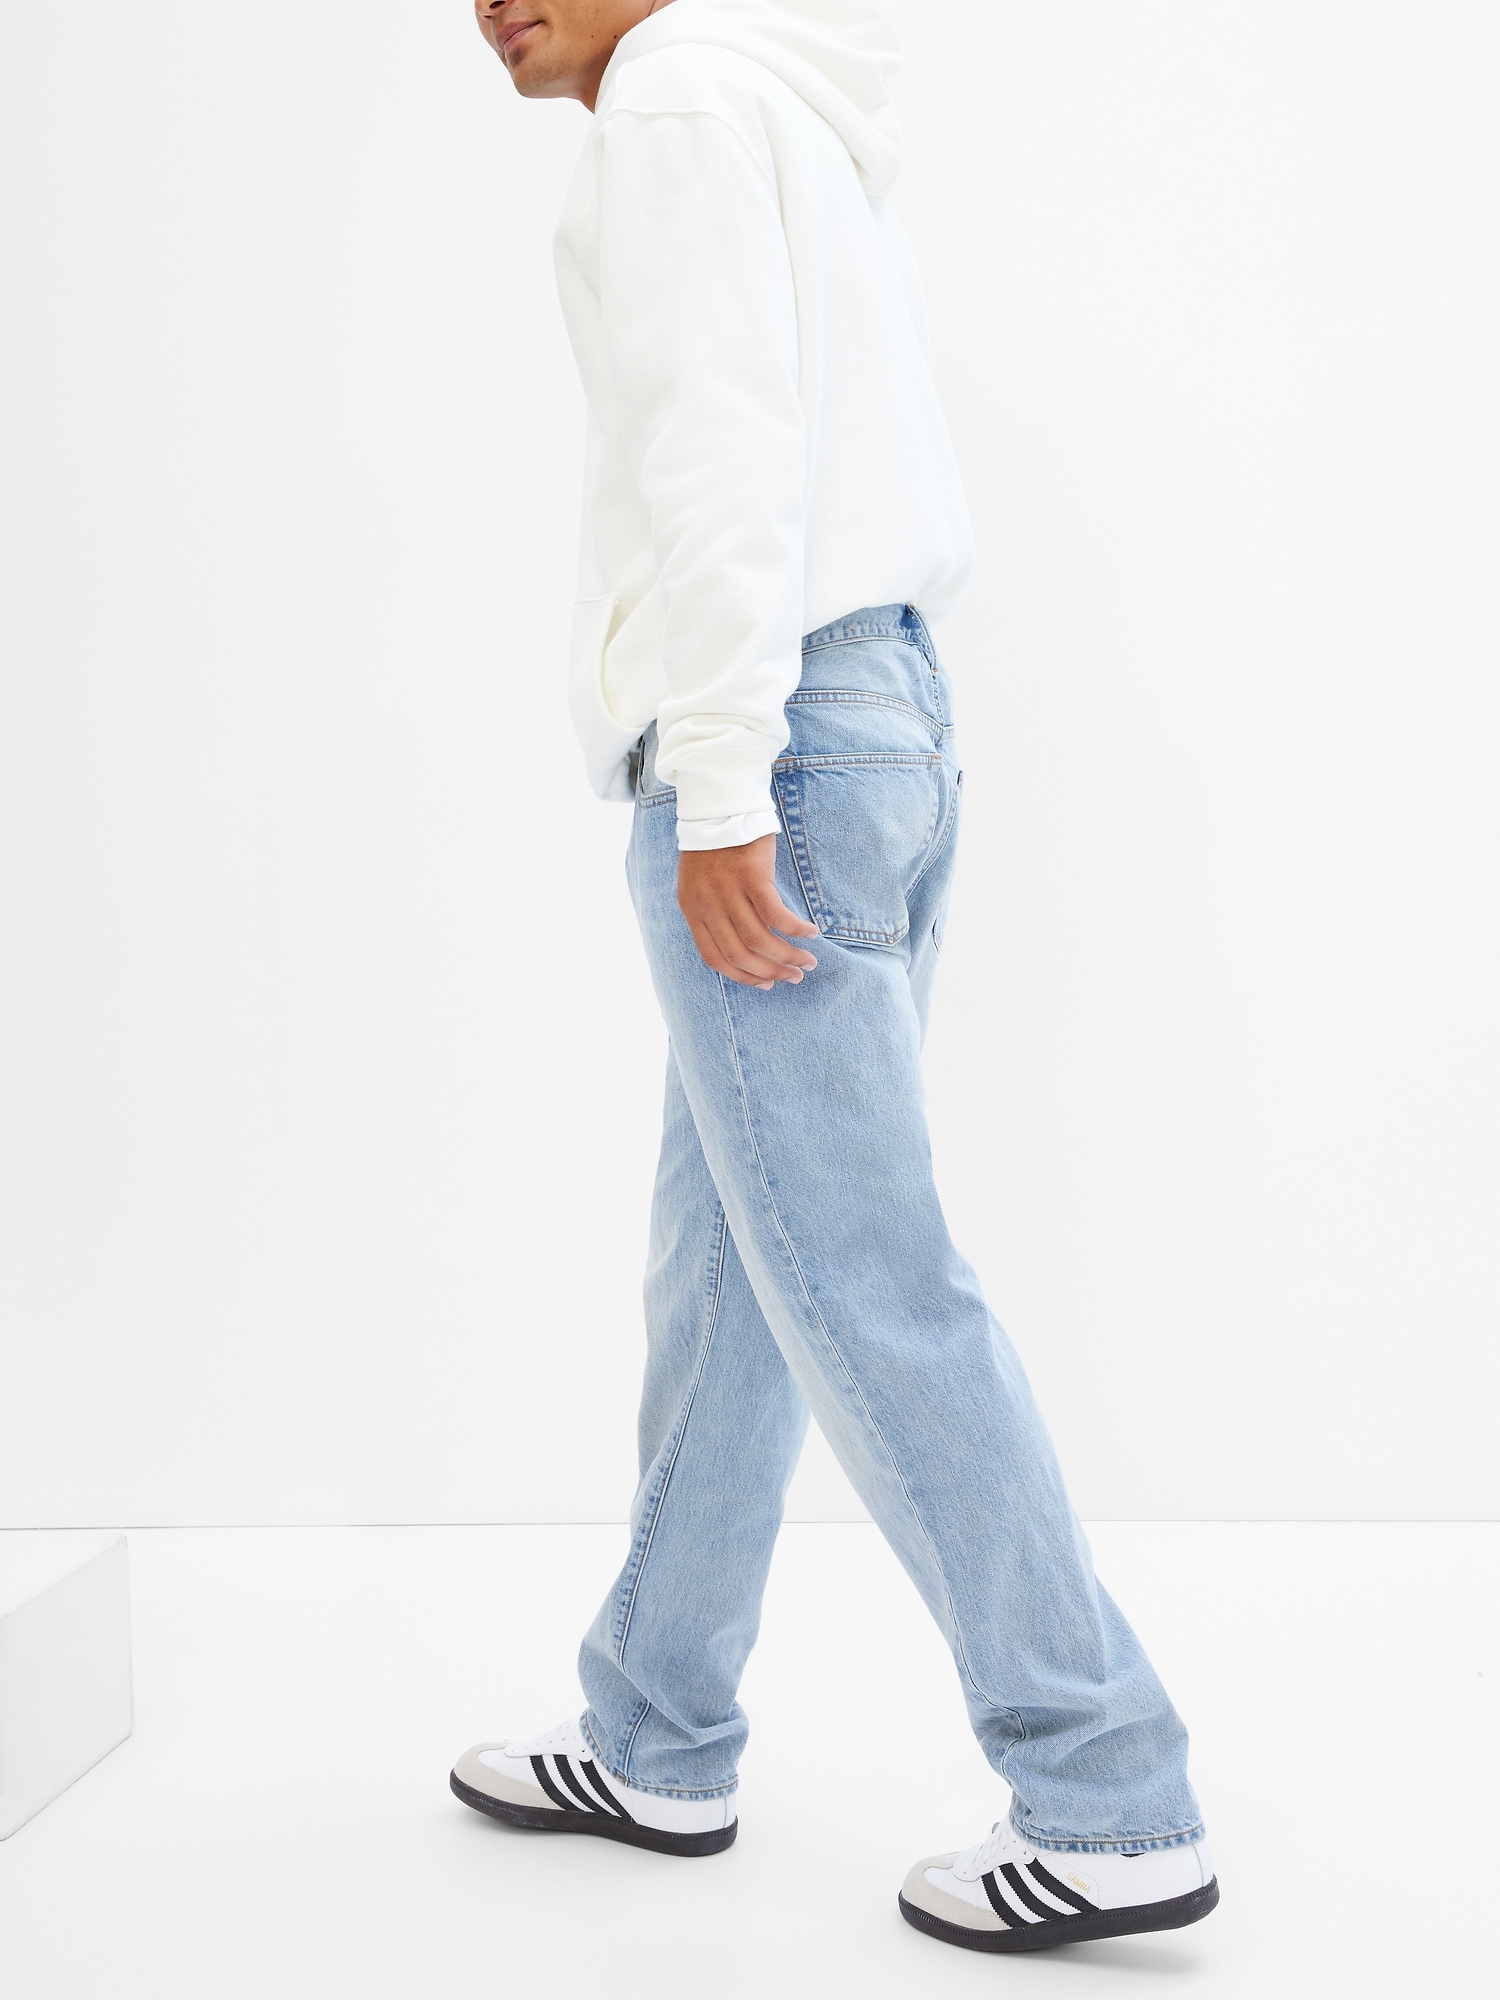 Shop Men MEDIUMWAS '90s Original Straight Jeans with Washwell - 14 KWD in  Kuwait